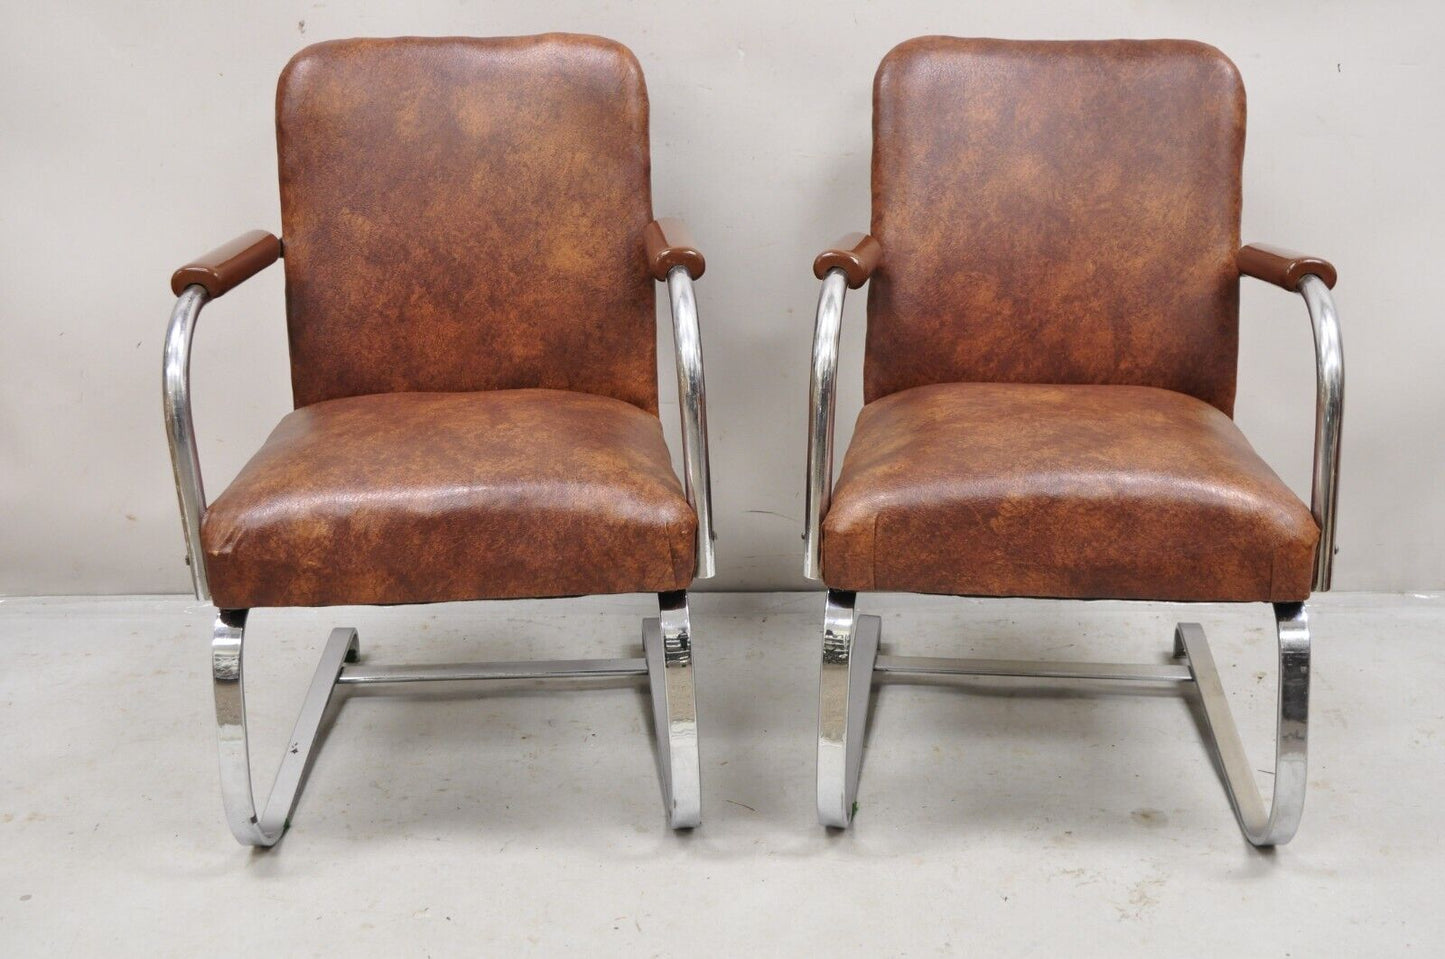 Vintage Lloyd Mfg Kem Weber Art Deco Steel Cantilever Lounge Chairs - a Pair